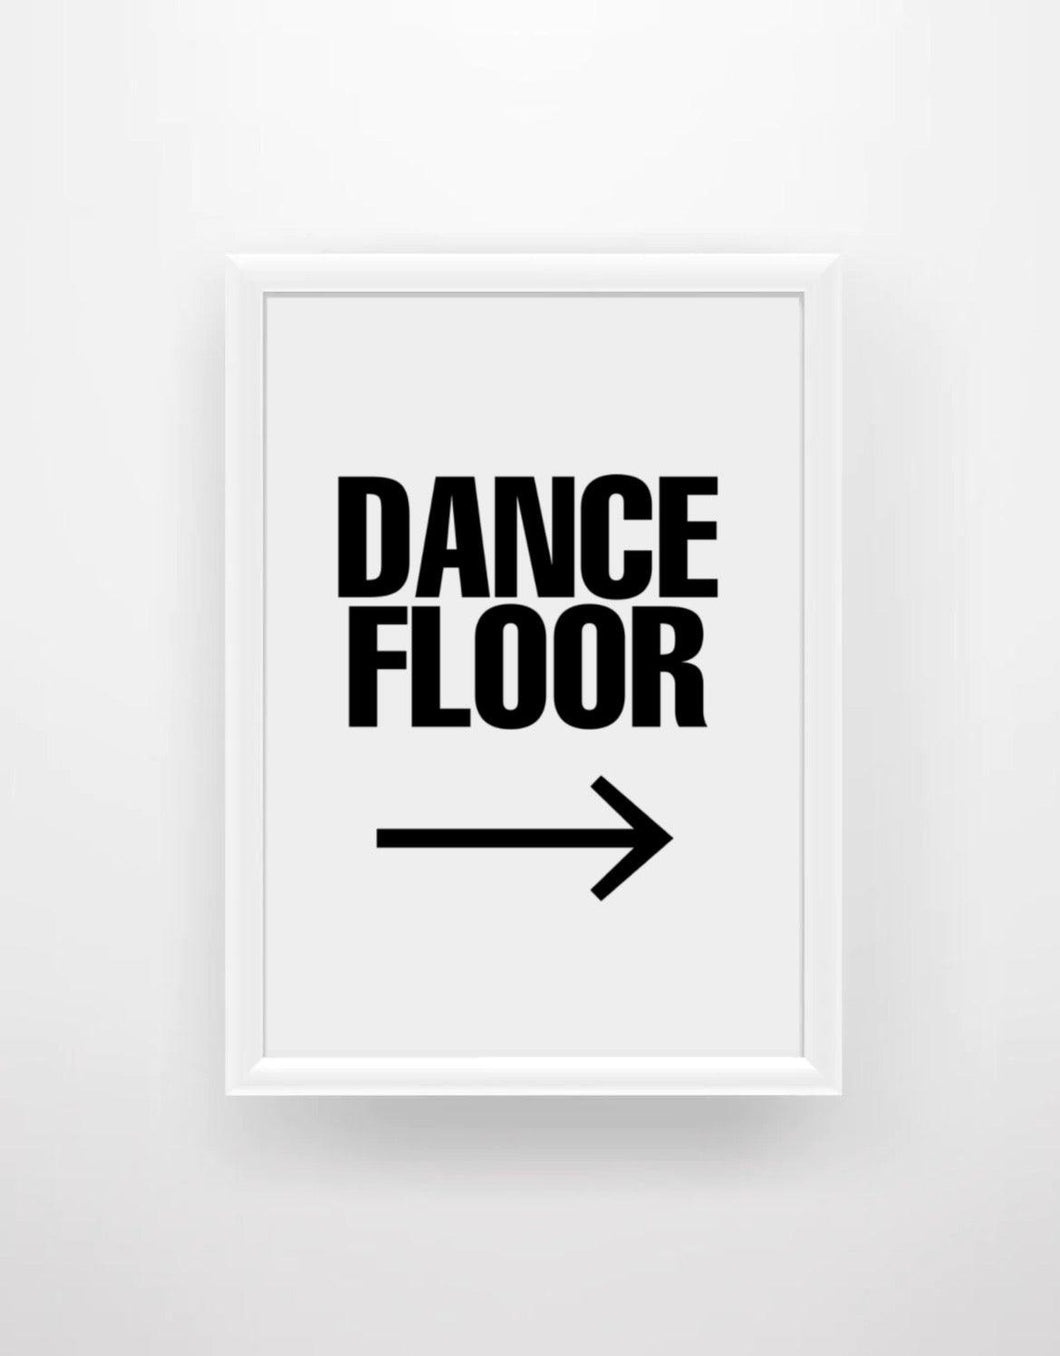 Dance floor (right) - Chic Prints